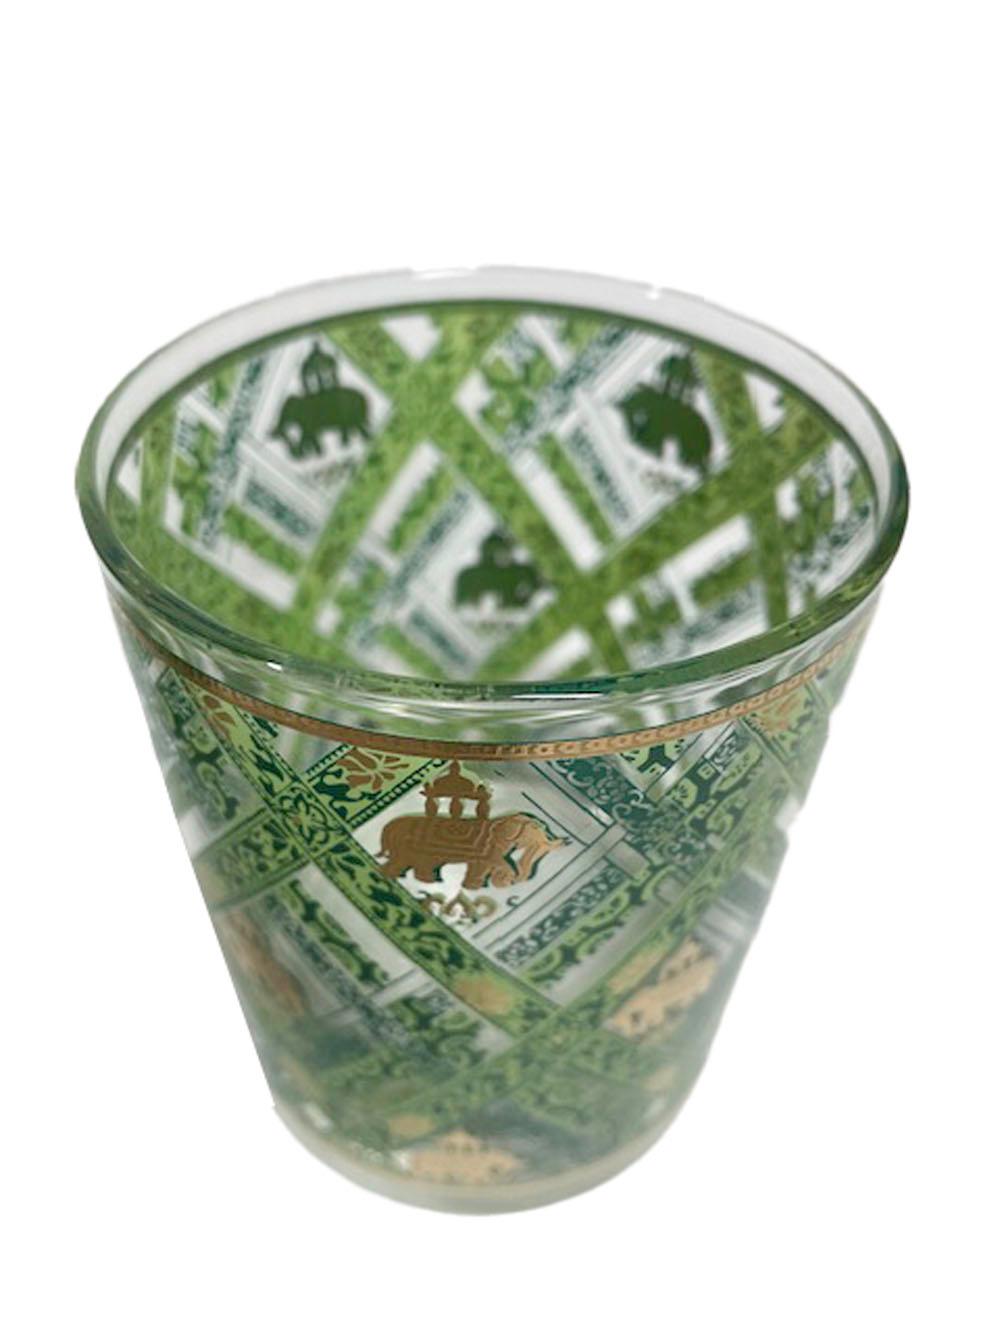 American Vintage Cera Glassware Rocks Glasses with Mughal Elephants on a Lattice Ground